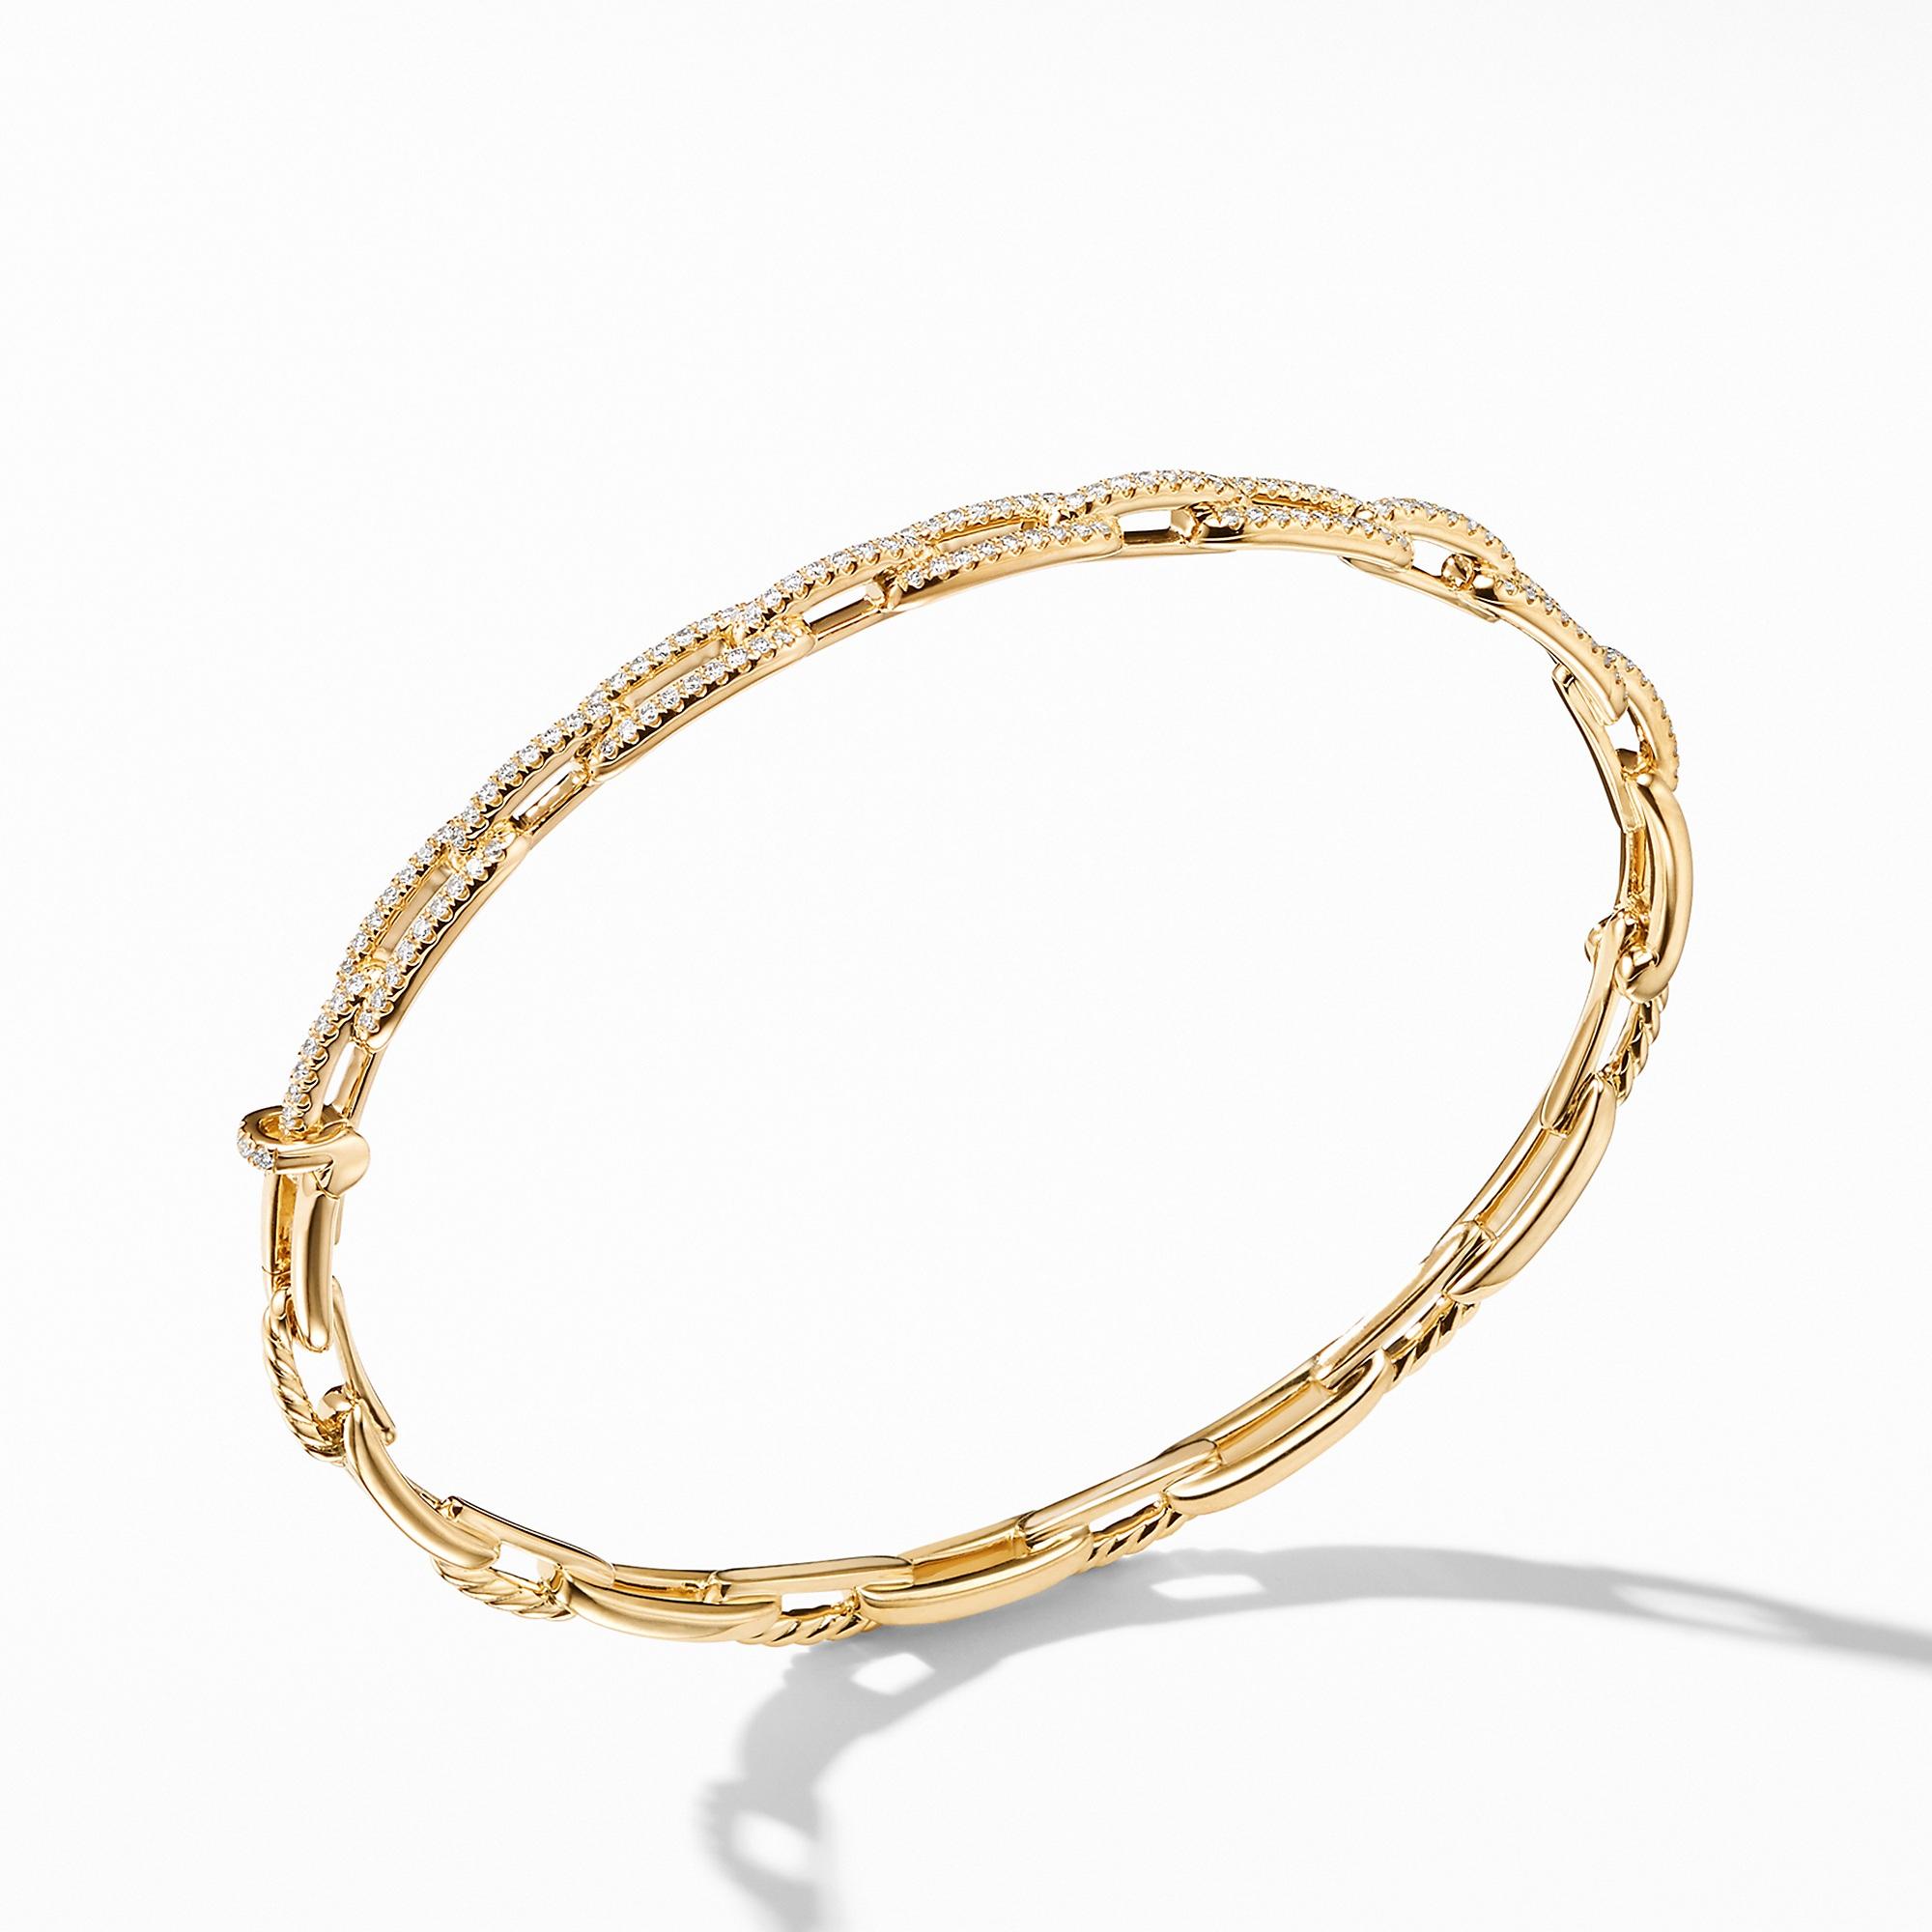 David Yurman Stax 4mm Chain Link Bracelet with Diamonds in 18k Gold